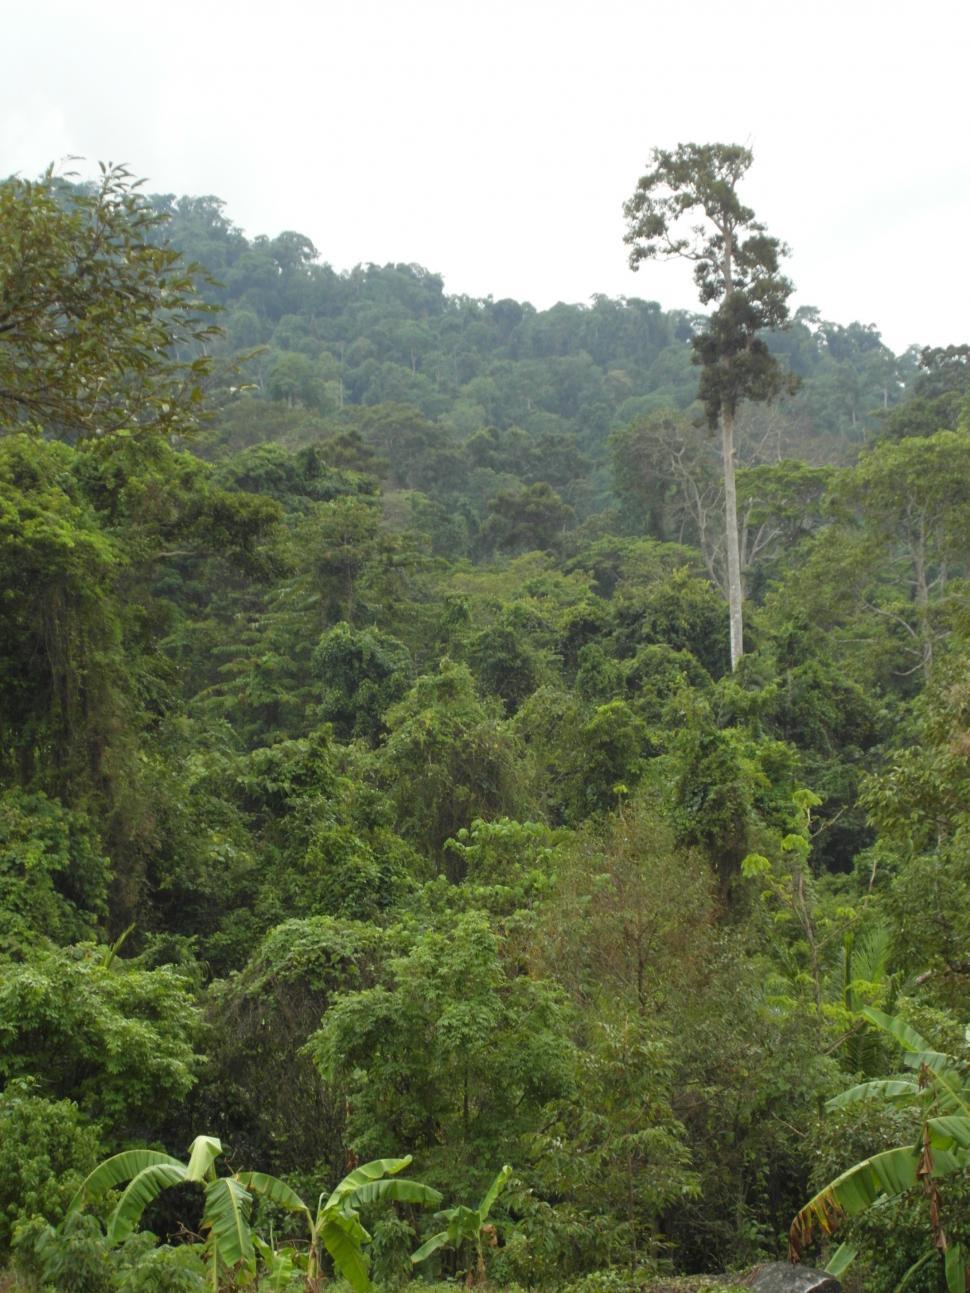 Free Image of Jungle / Tropical Rainforest 